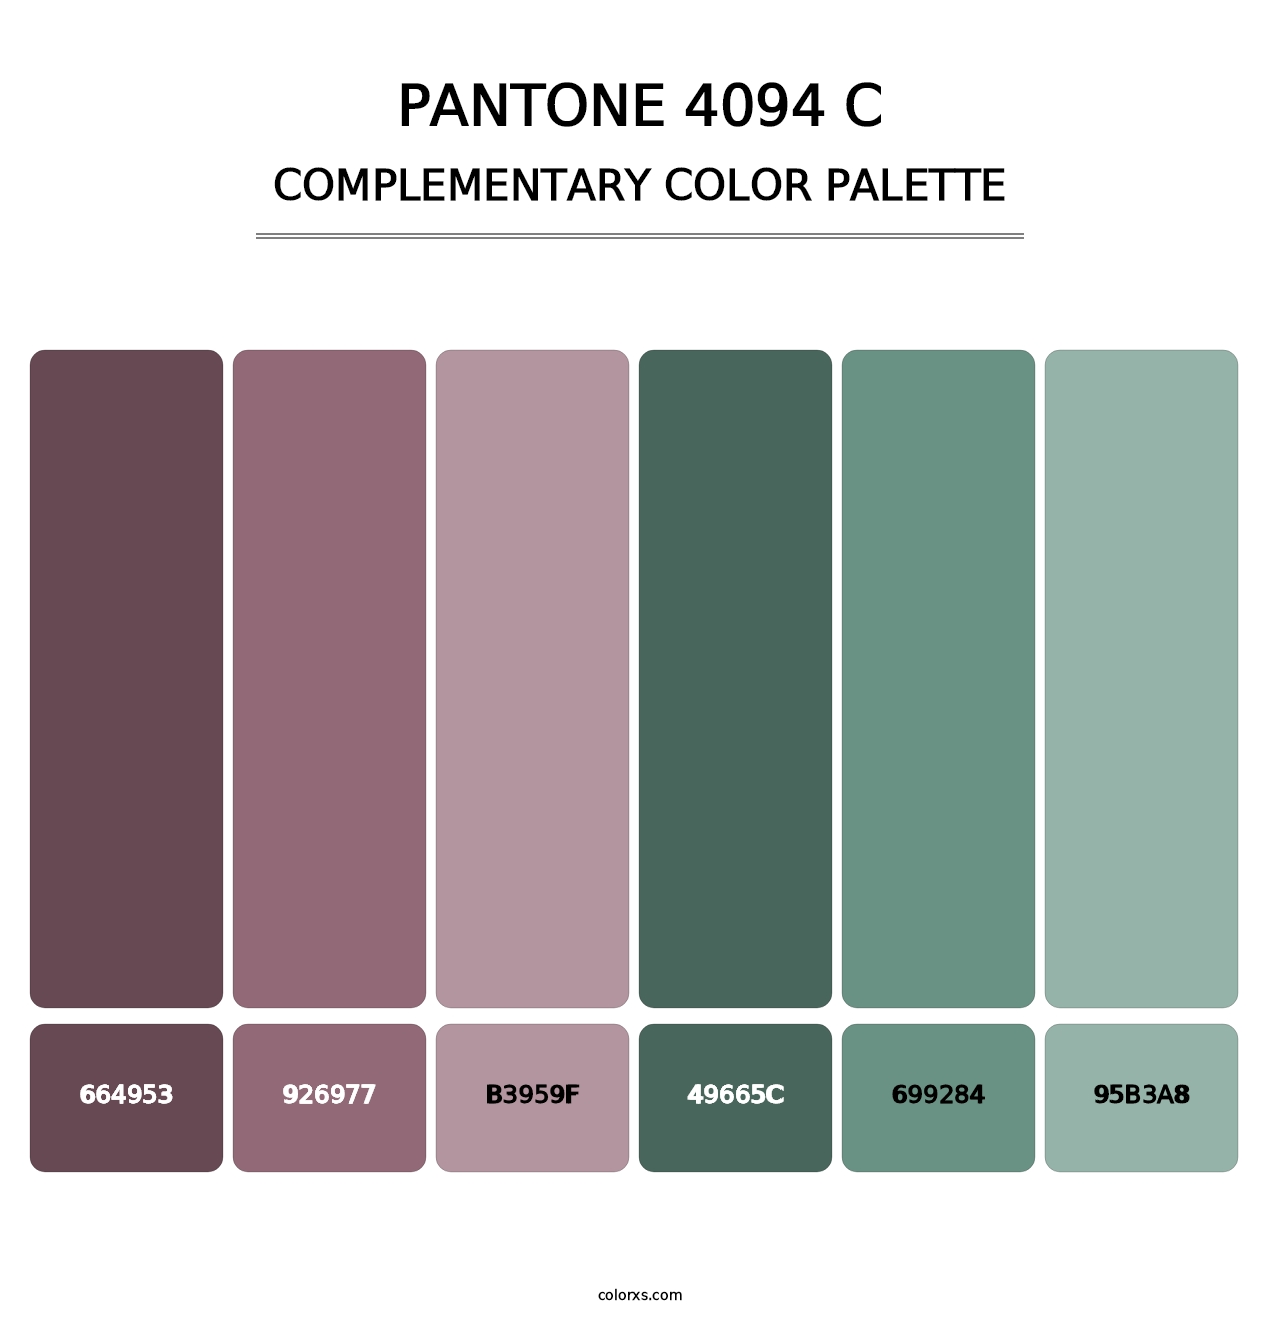 PANTONE 4094 C - Complementary Color Palette